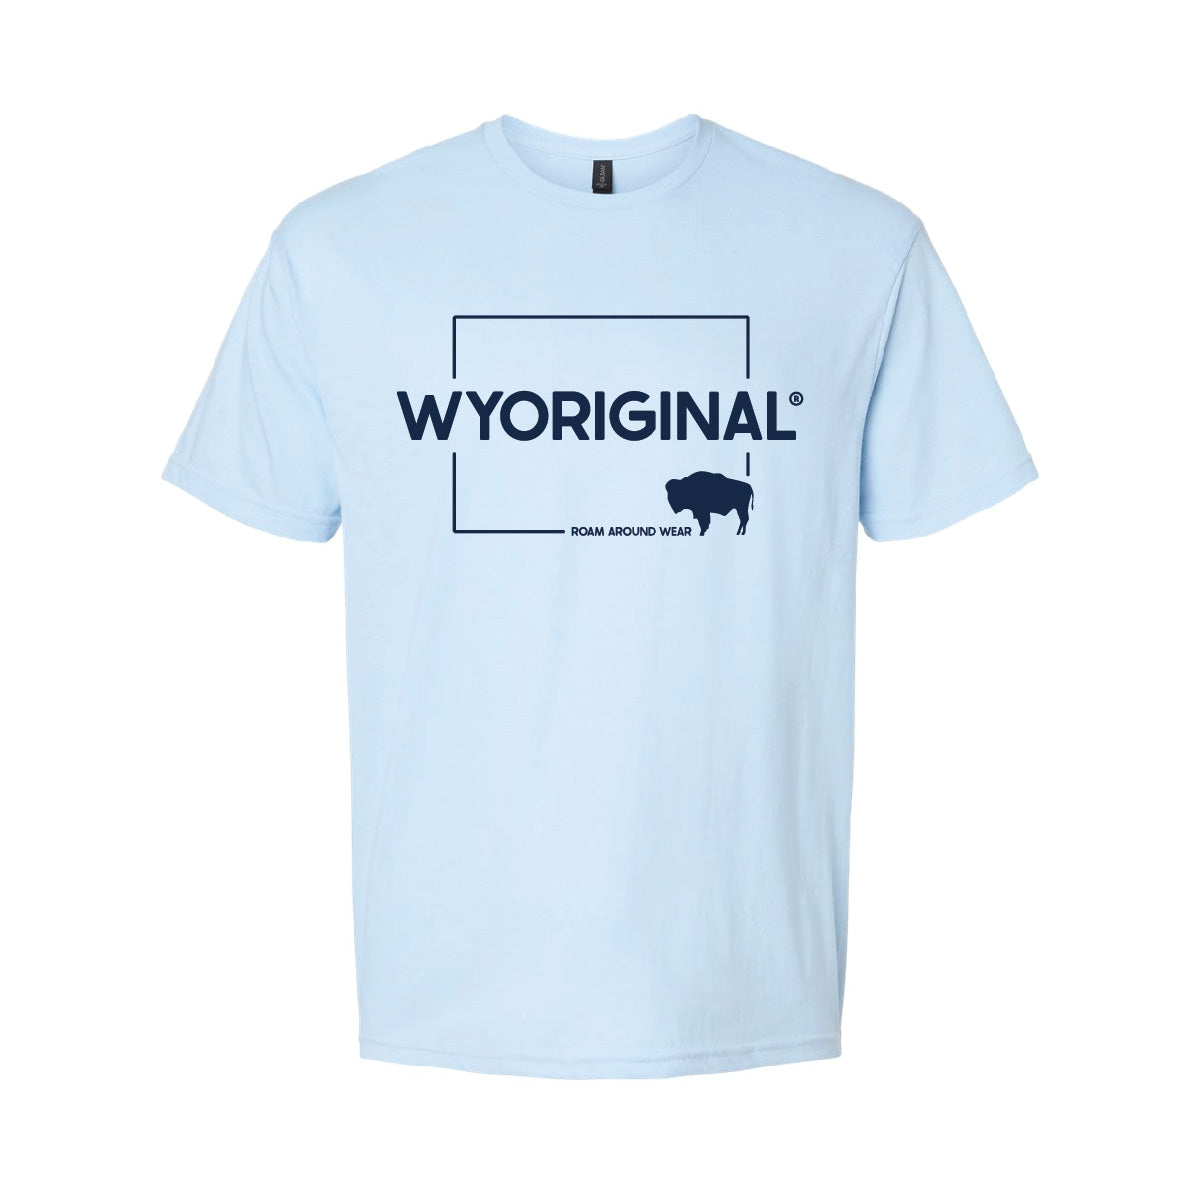 Wyoriginal tee. Unisex Wyoming tee. Roam Around Wear is a wyoming t-shirt company printed in Gillette, Wyoming